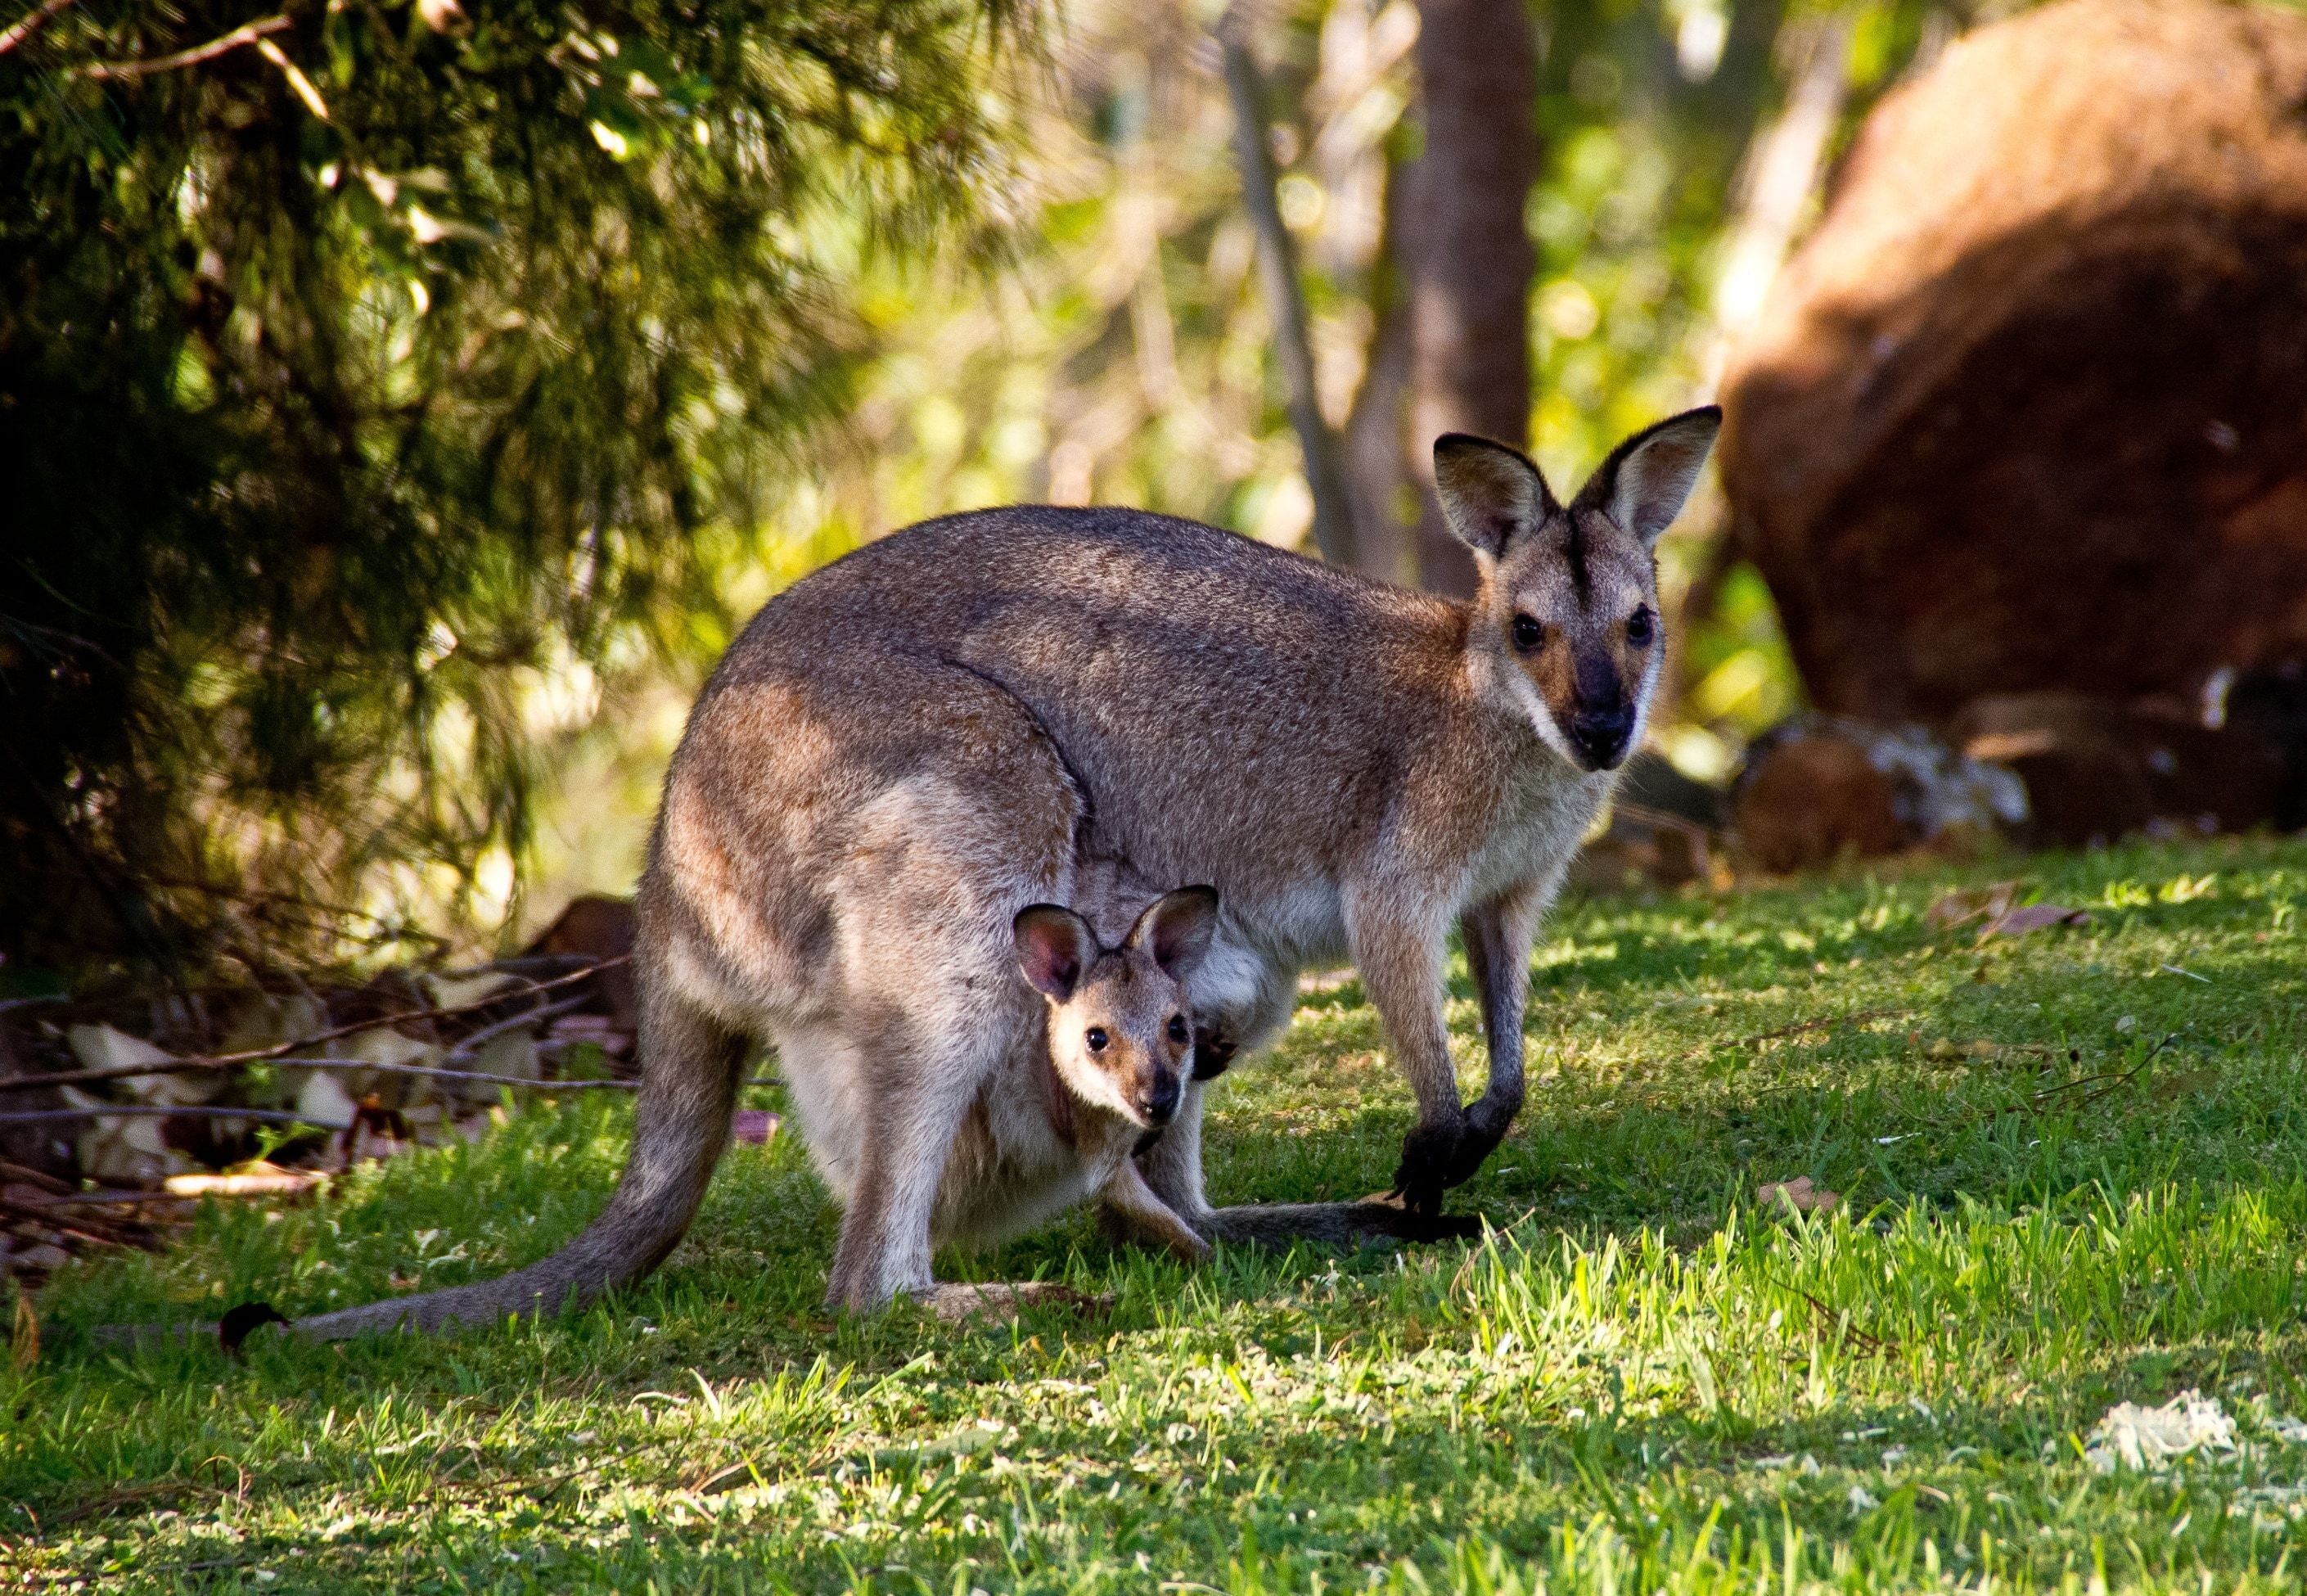 Wallabies, Rednecked Wallaby, Kangaroo, grass, animal wildlife